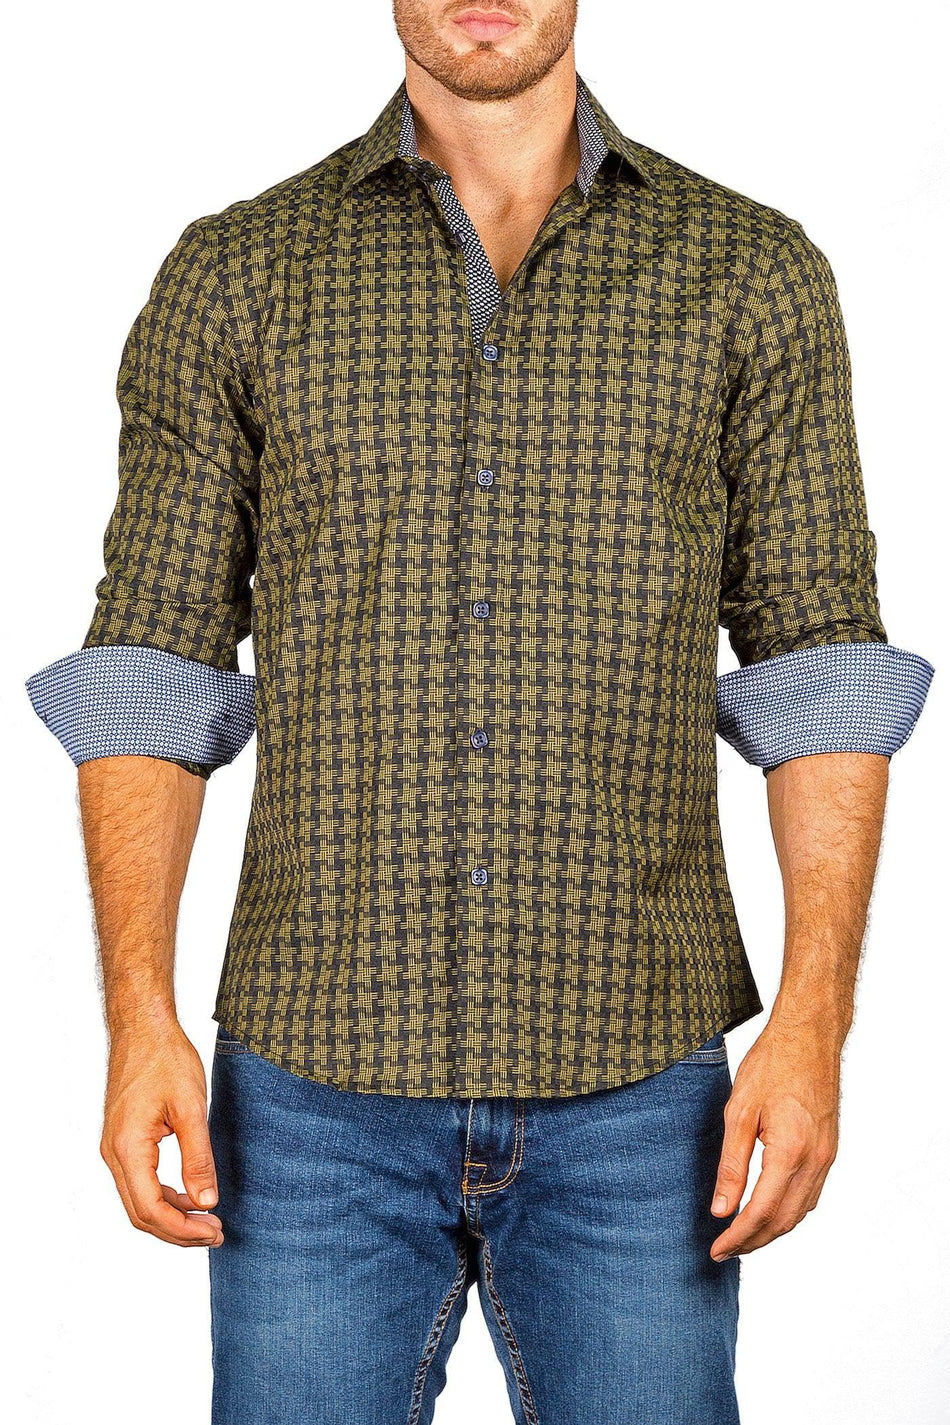 Men's Modern Fit Cotton Button Up Olive Checkered Crosshatch